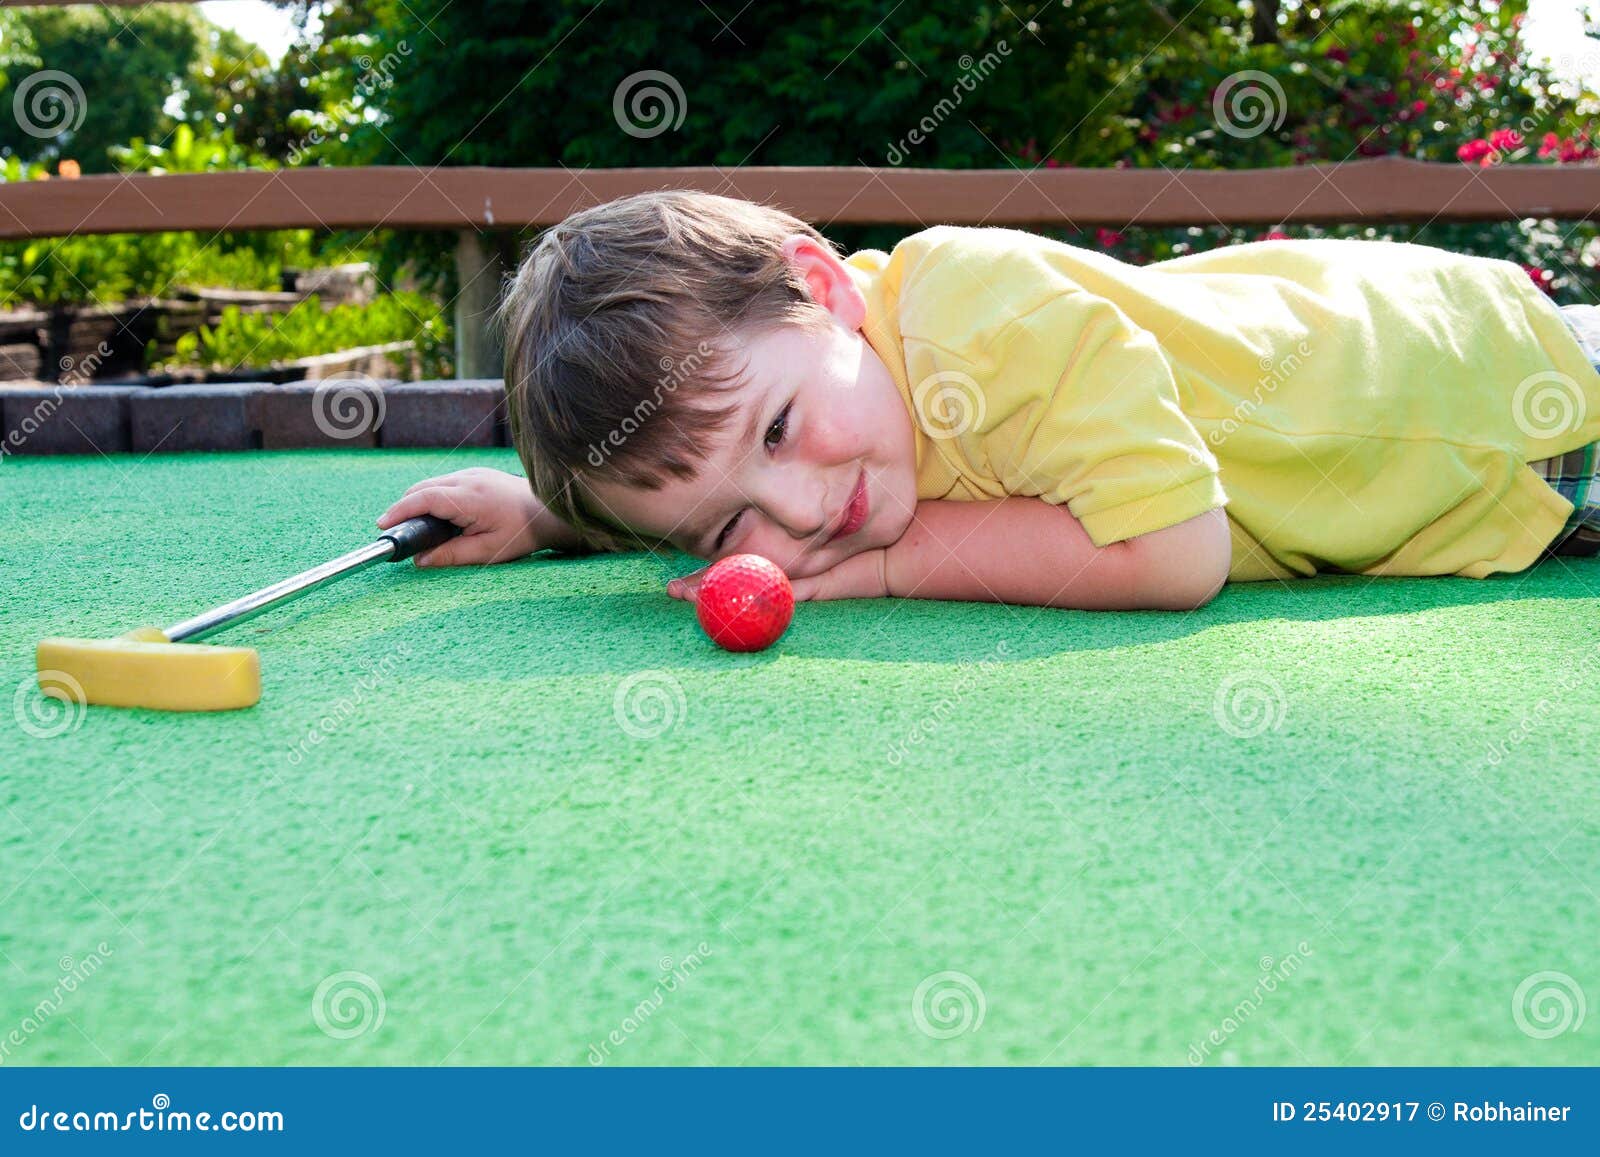 young boy plays mini golf